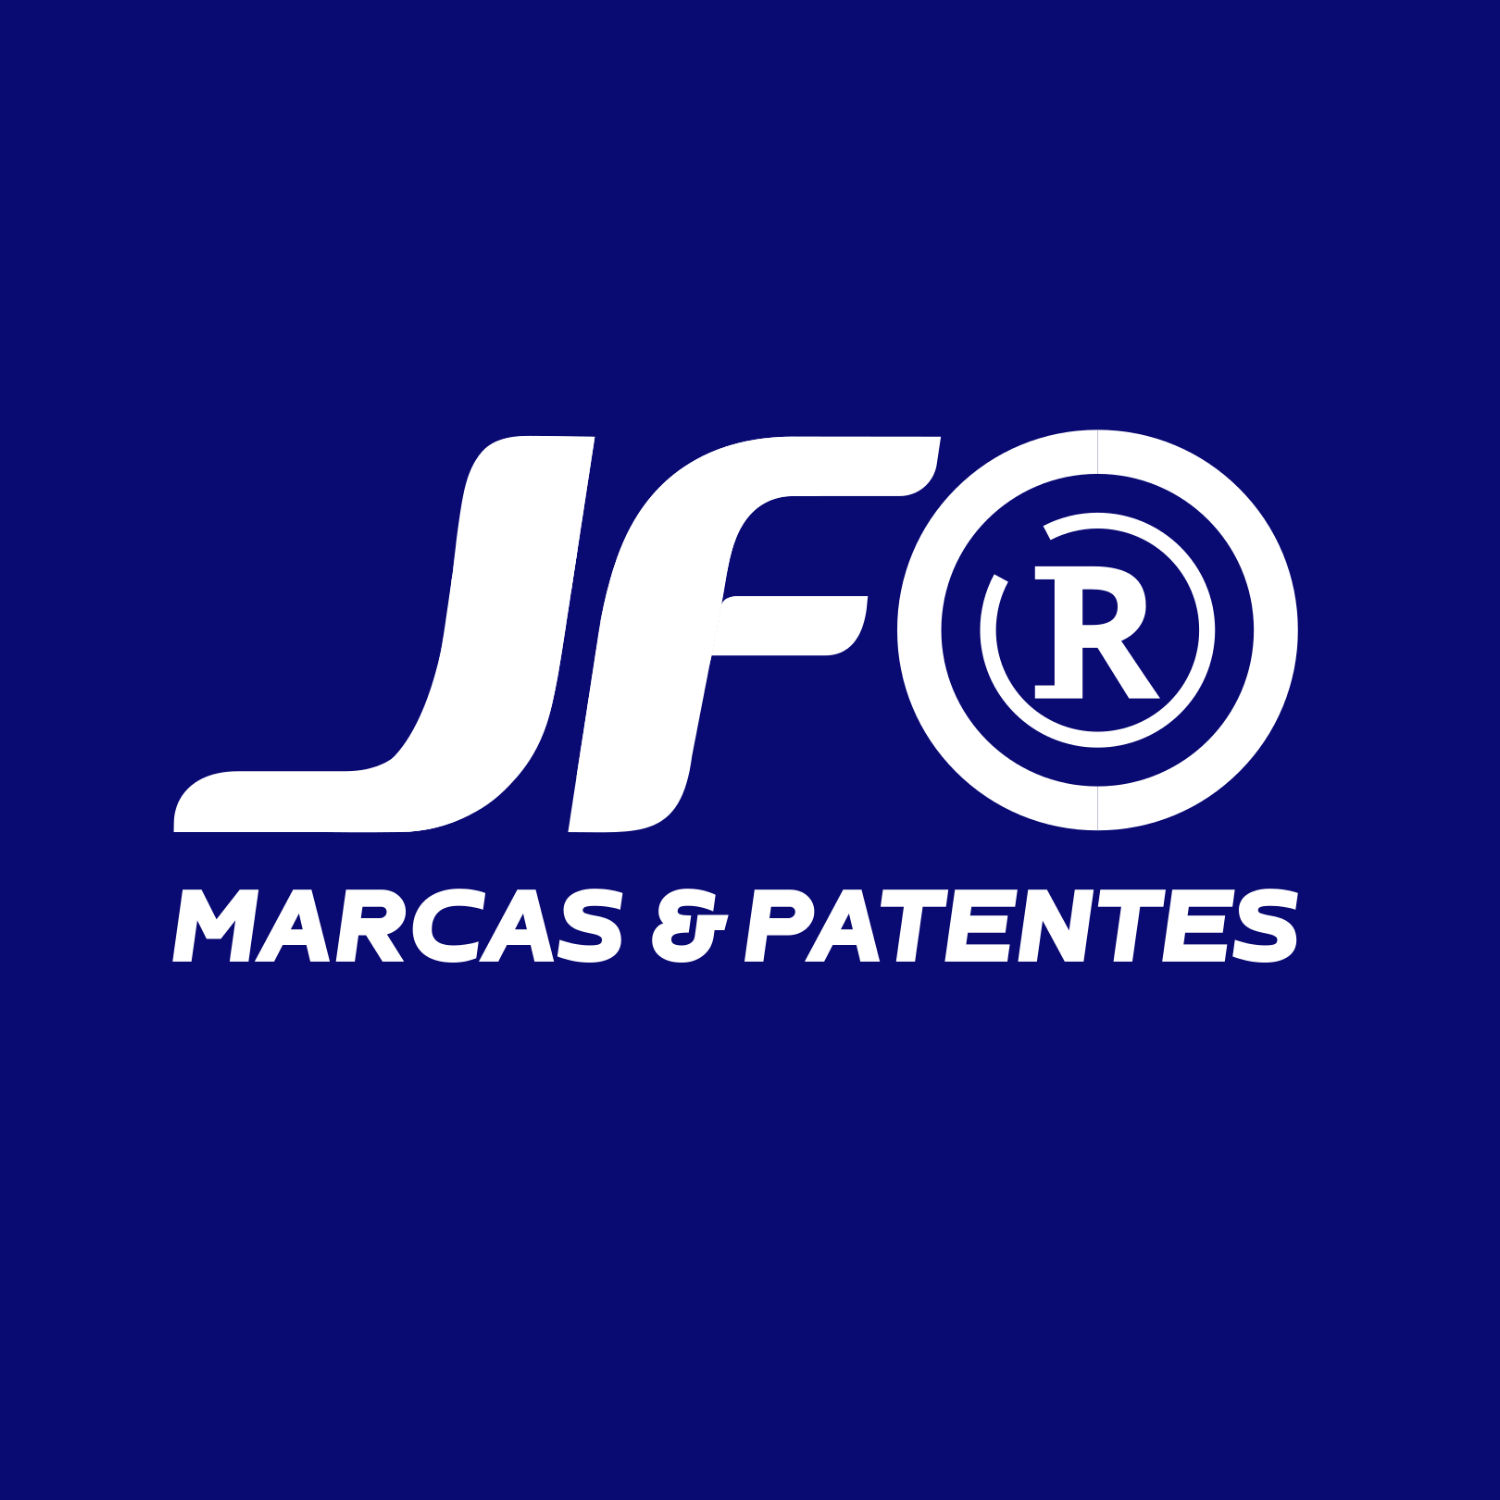 JF Marcas & Patentes®